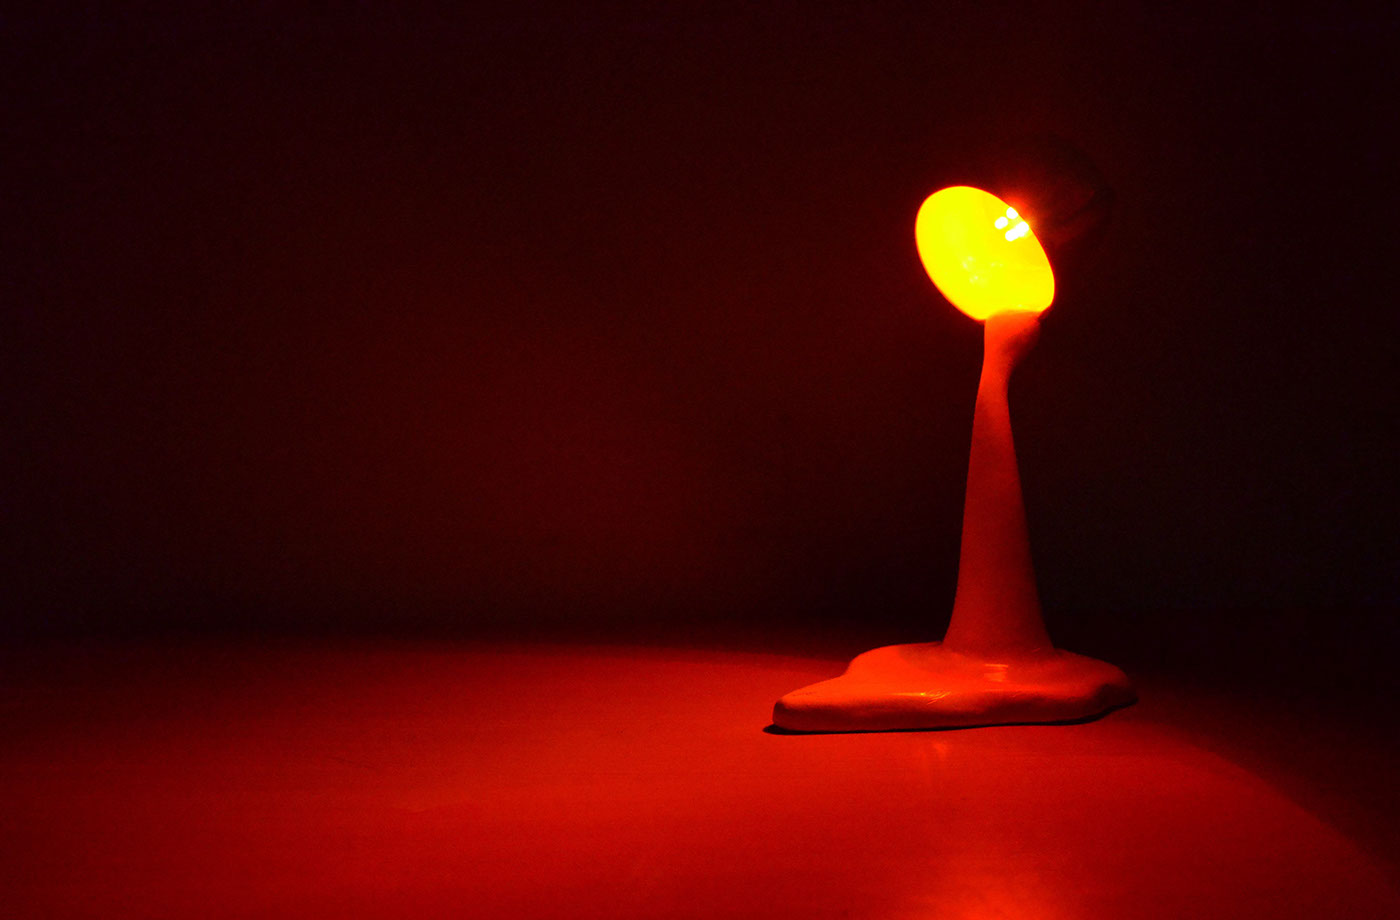 Lamp choco lava table top glass fiber model Model Making